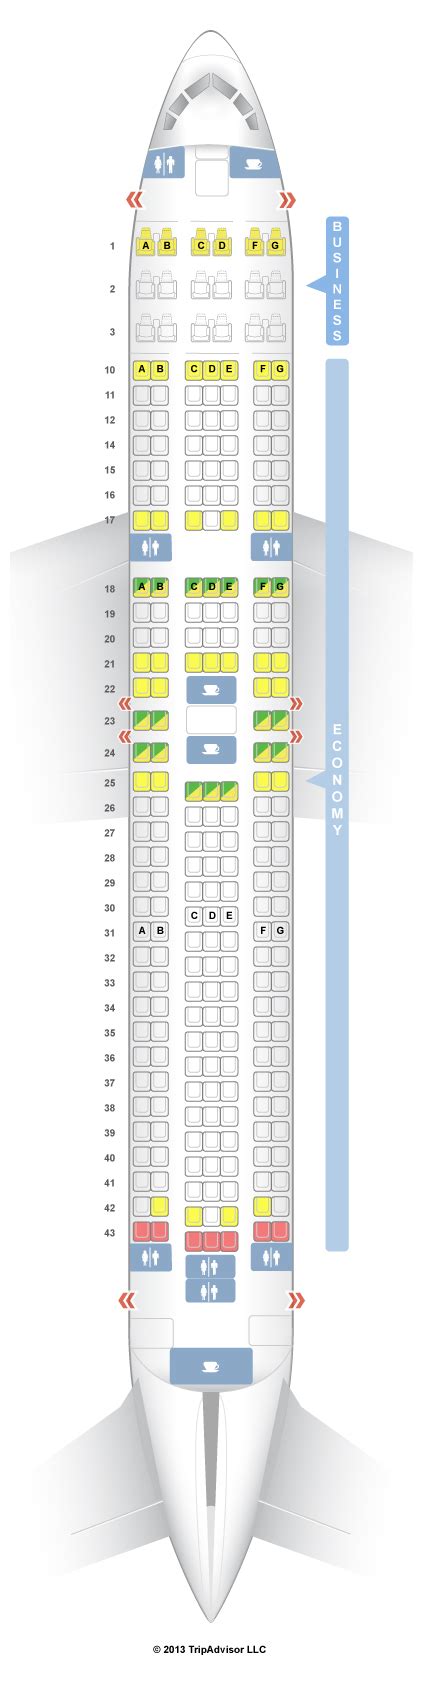 Seatguru Seat Map S7 Airlines Boeing 767 300er 763